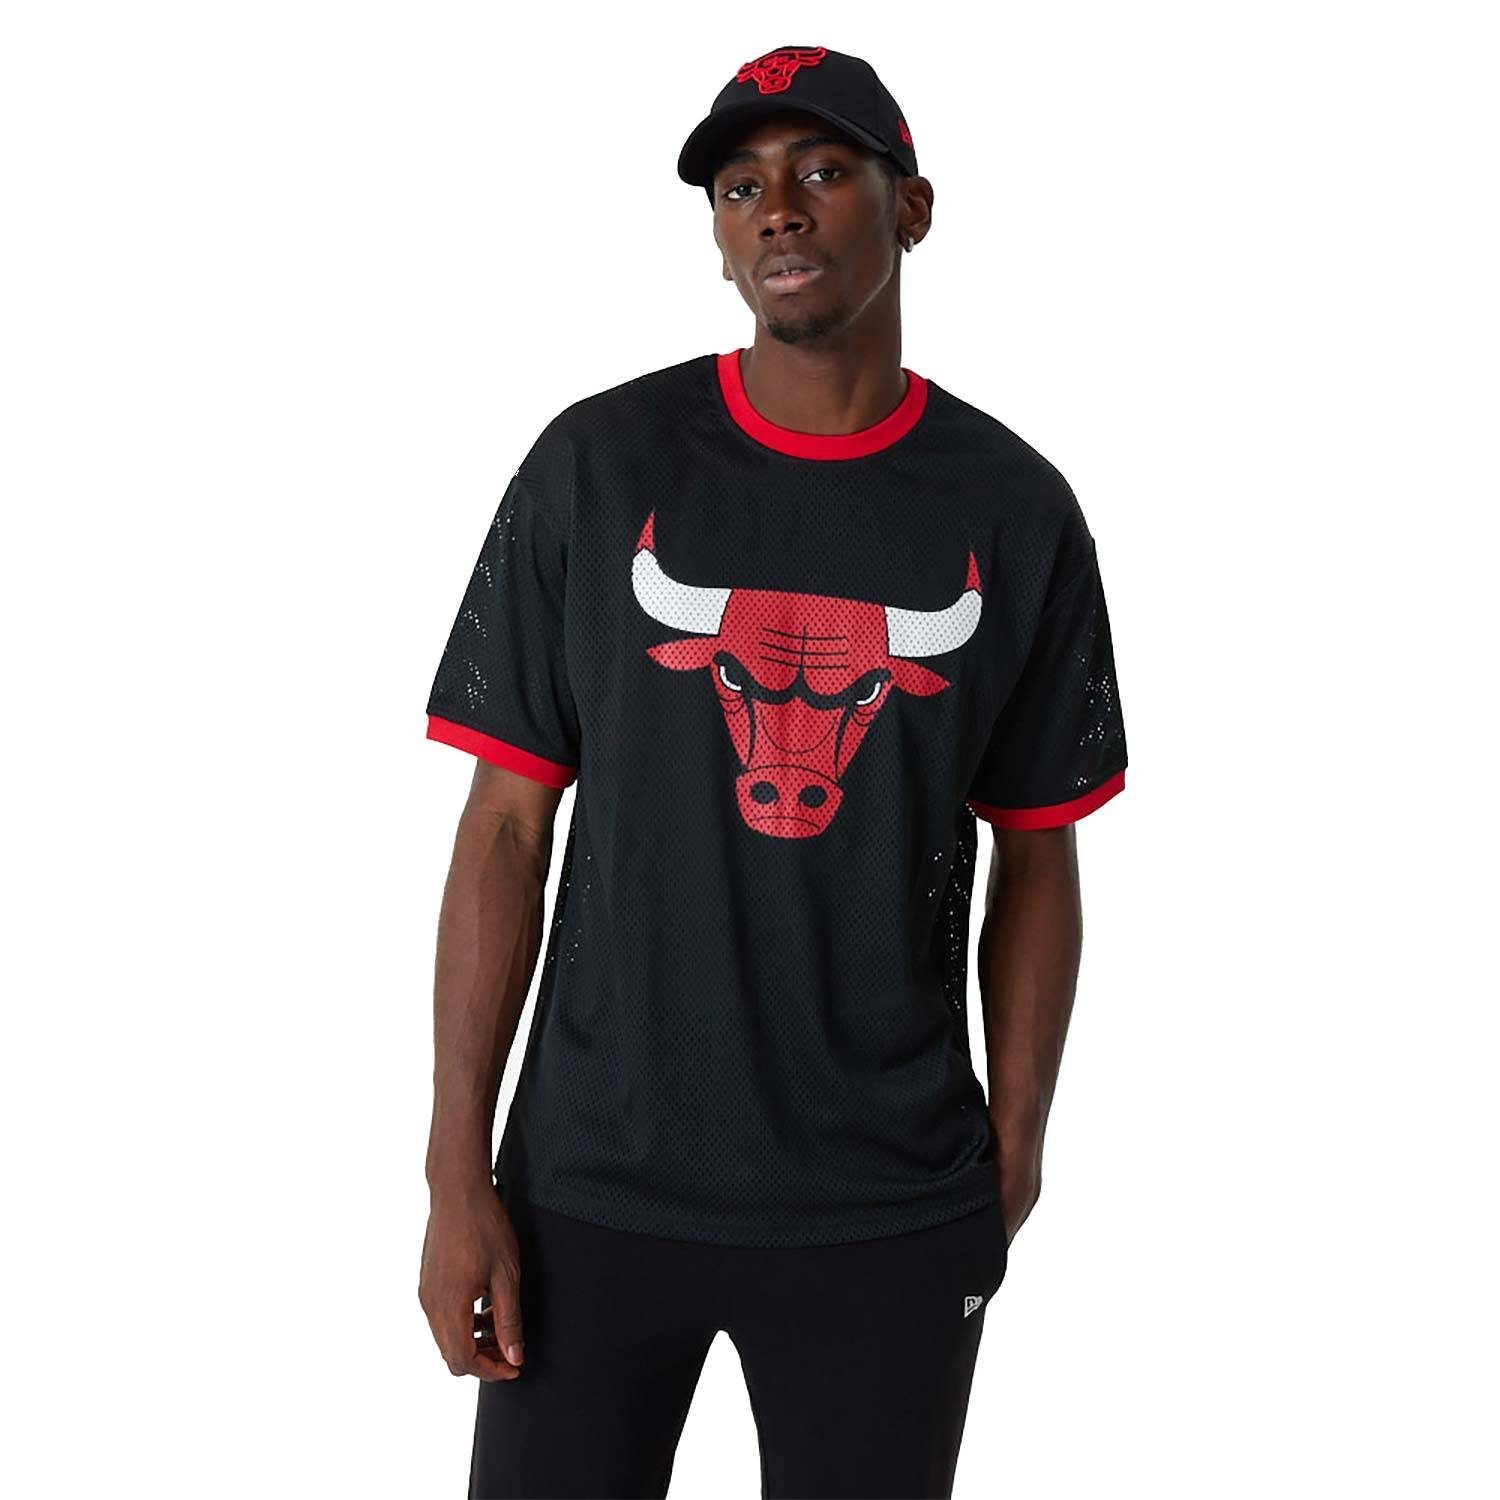 New Logo Era T-Shirt Era New Bulls NBA Chicago T-Shirt Mesh